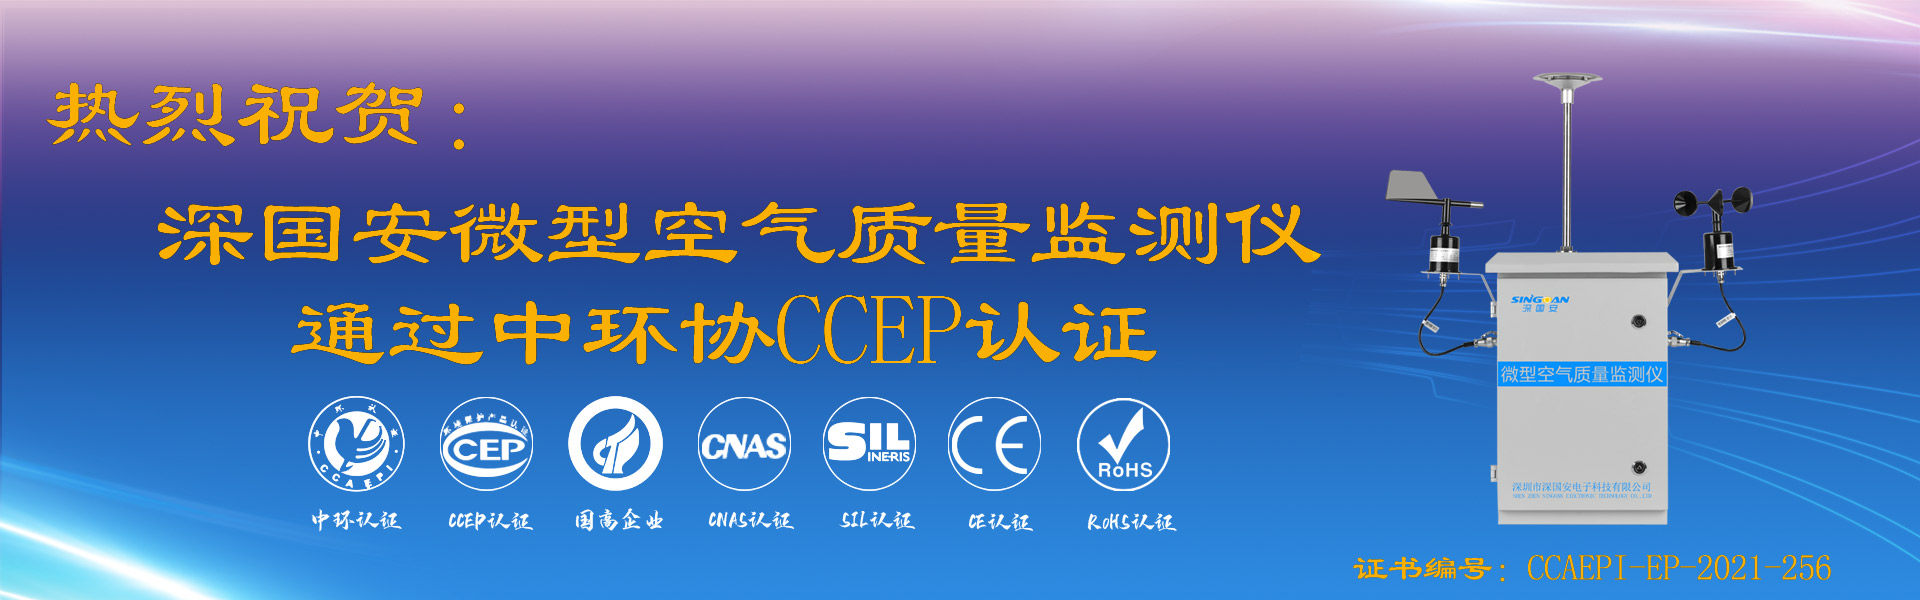 bat365官网登录入口微型空气质量监测仪通过CCEP认证